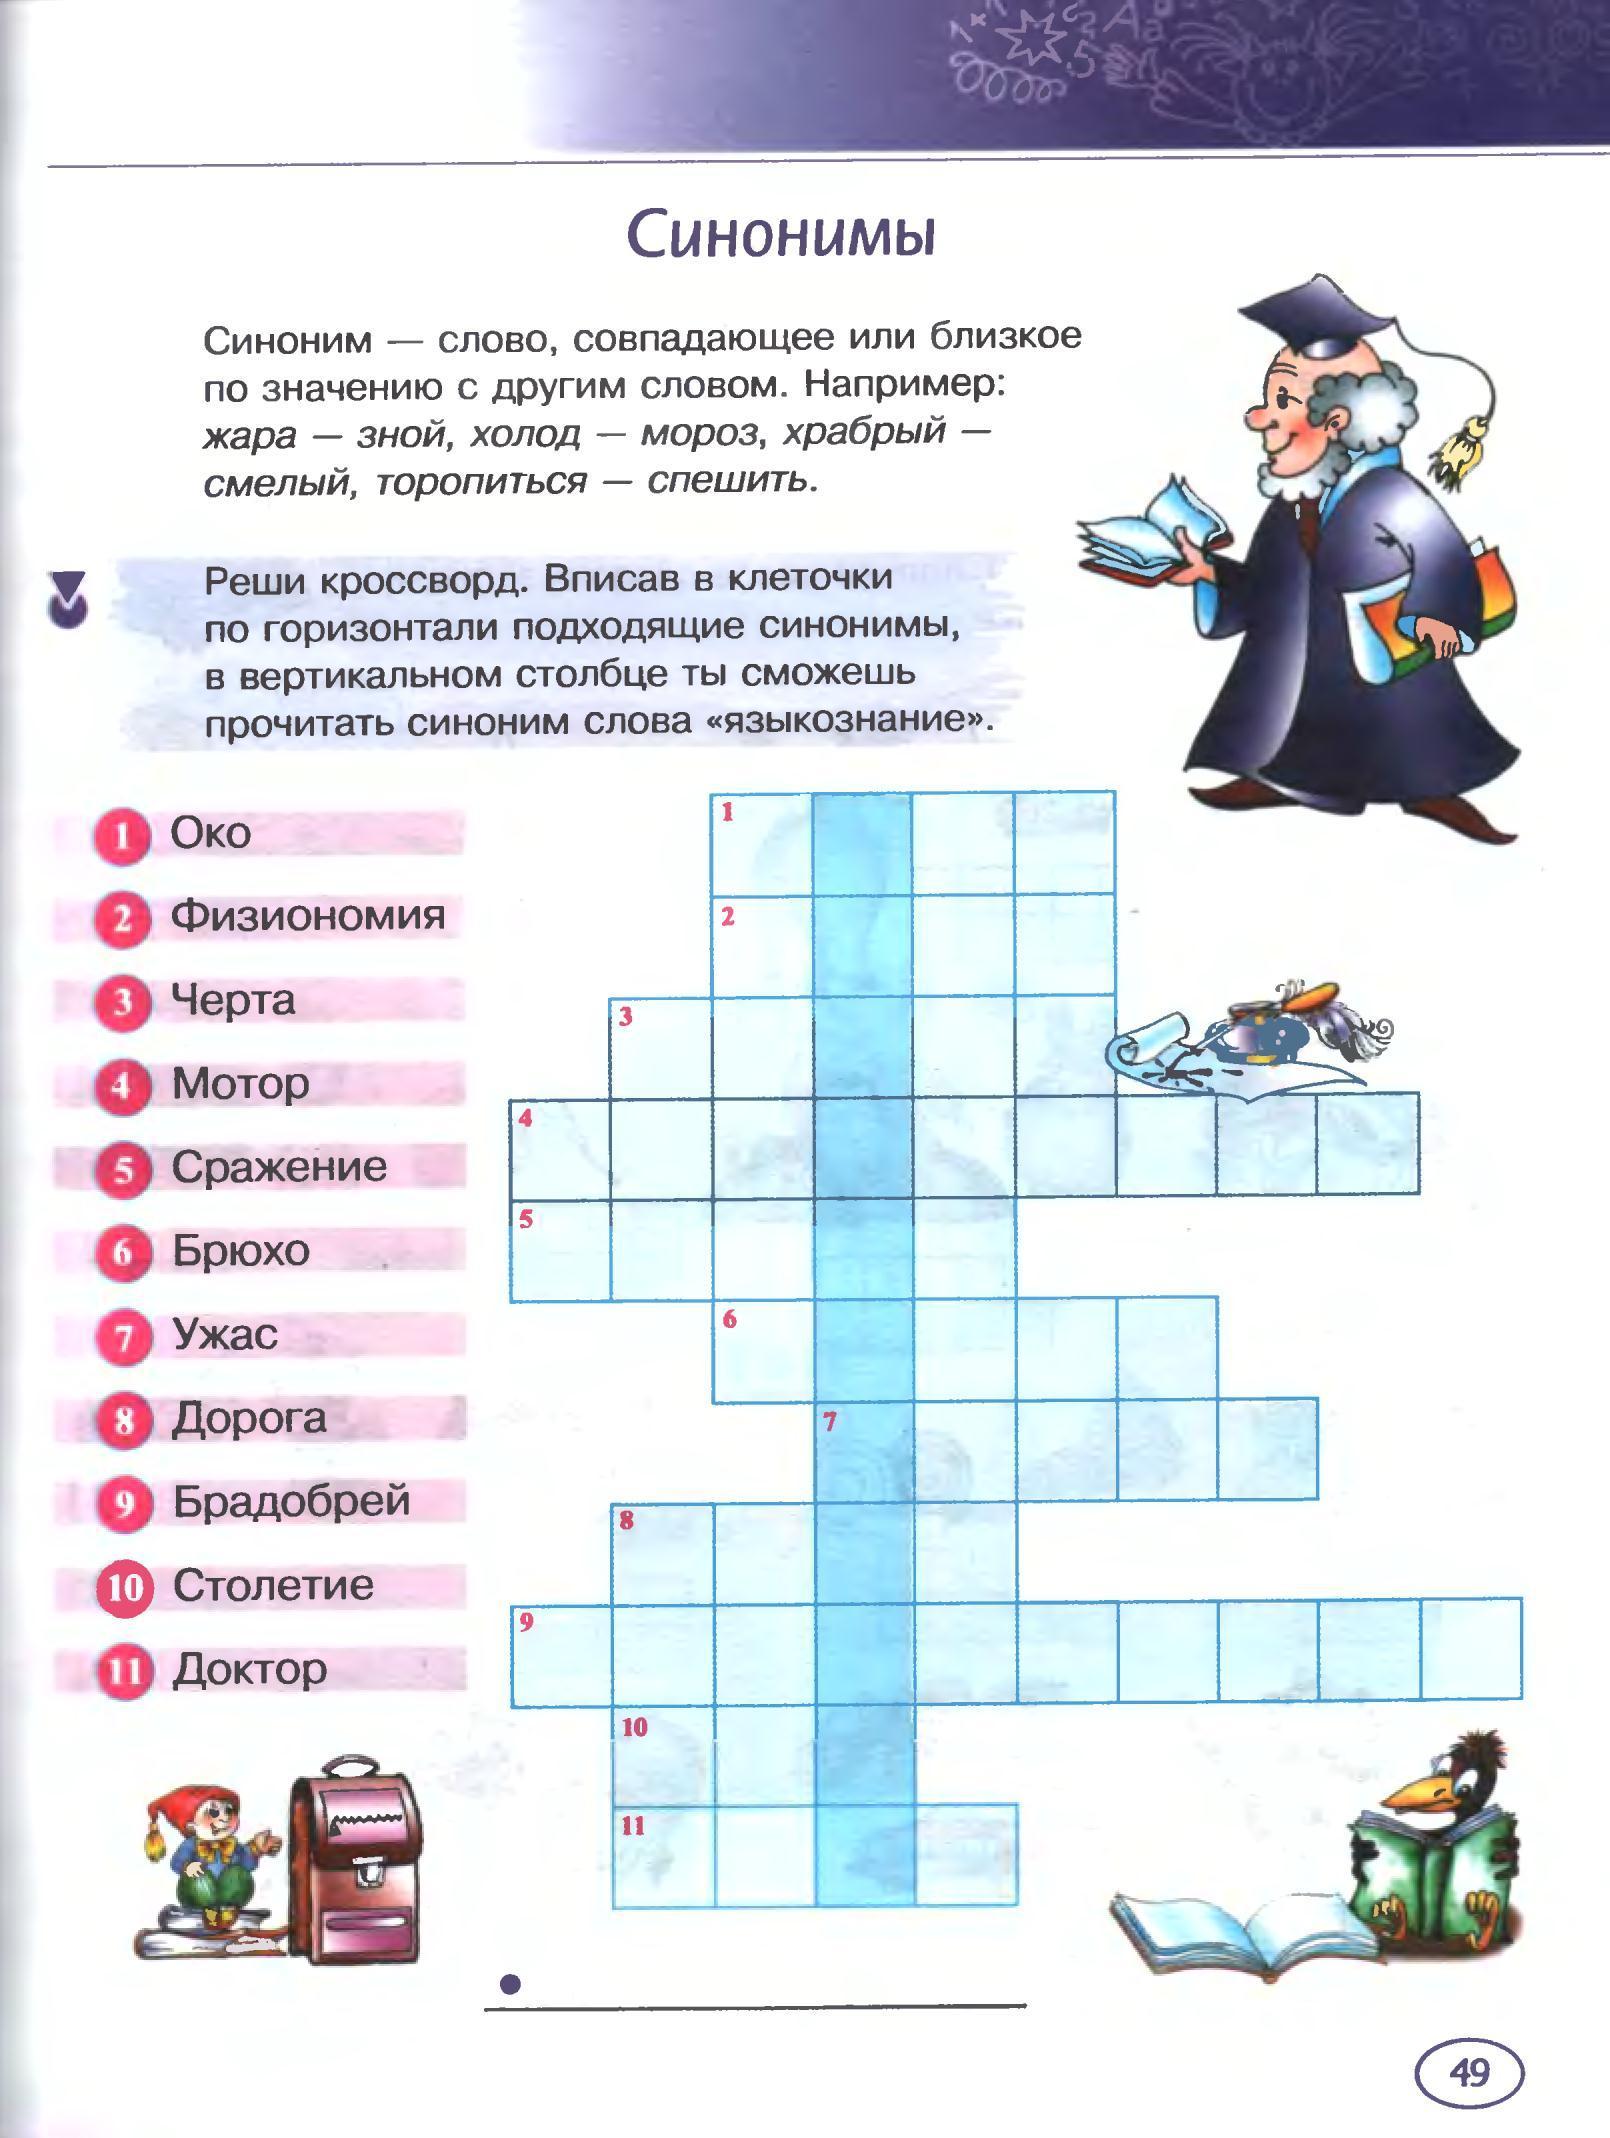 Кроссворд на тему русскийязк